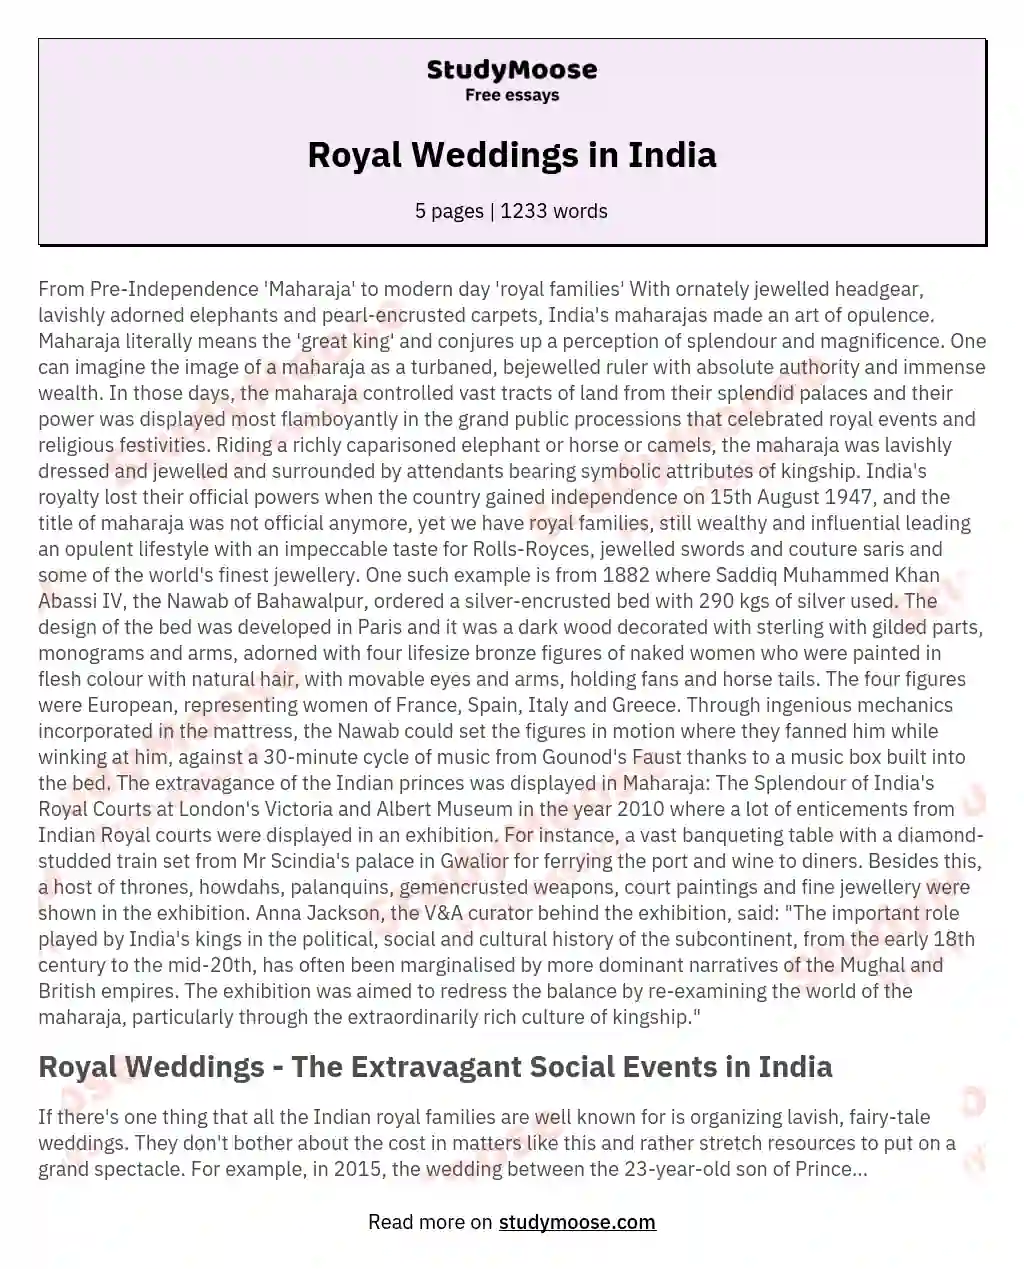 Royal Weddings in India essay